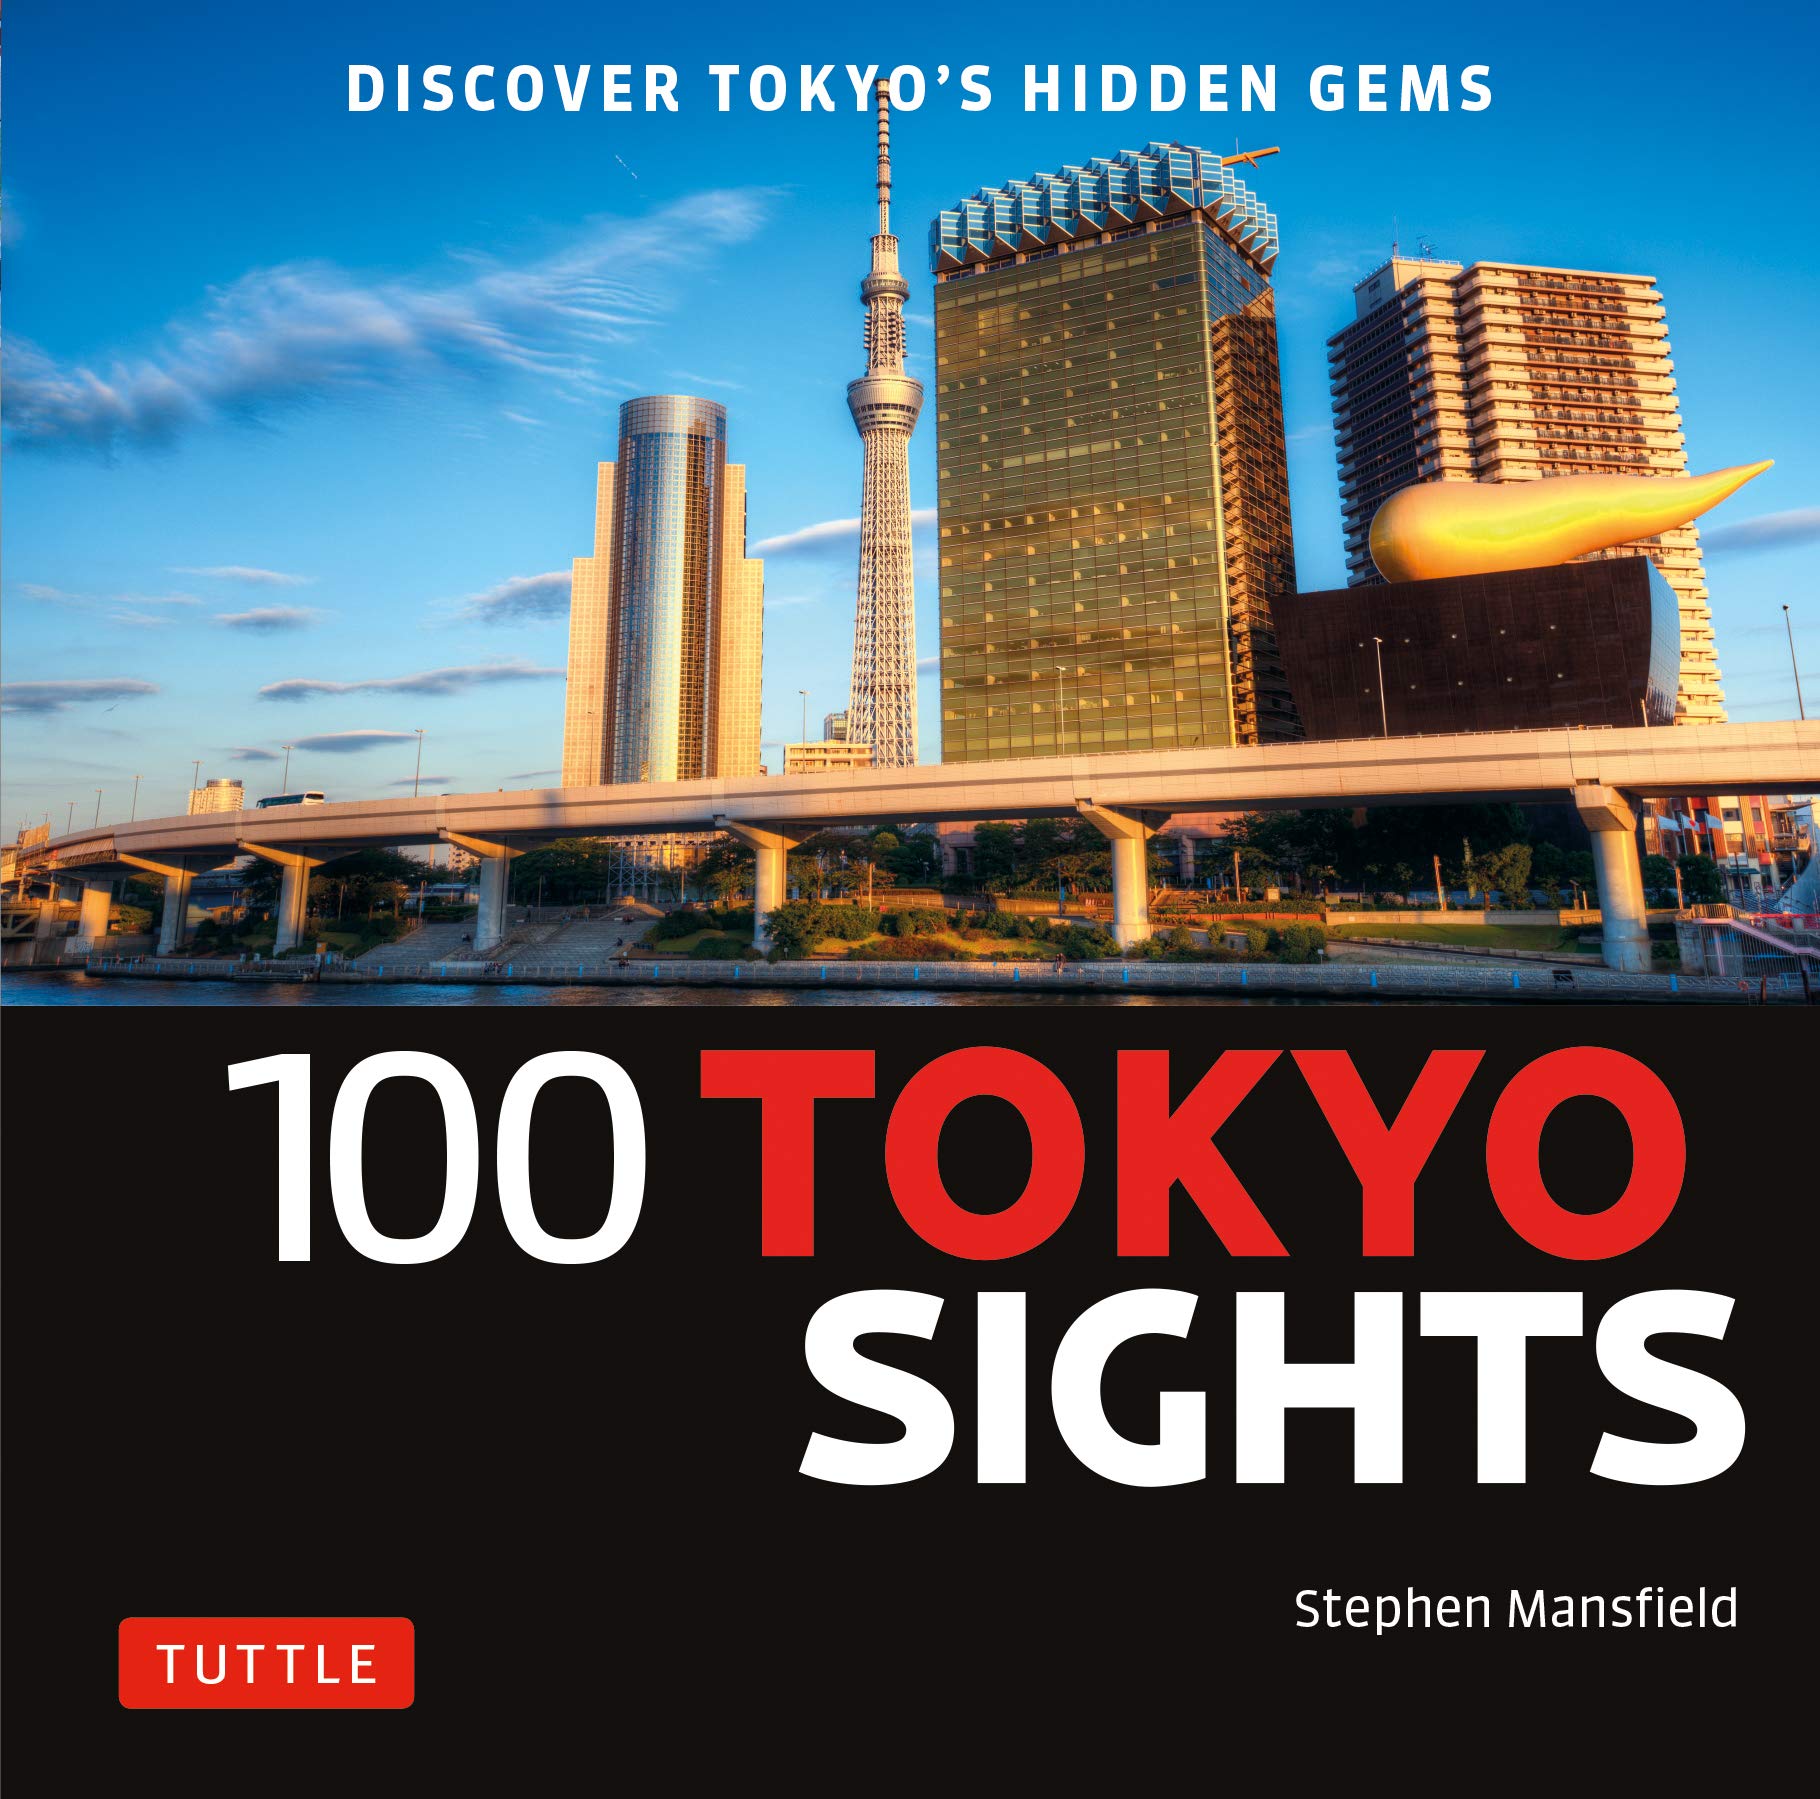 100 Tokyo Sights | Stephen Mansfield image0